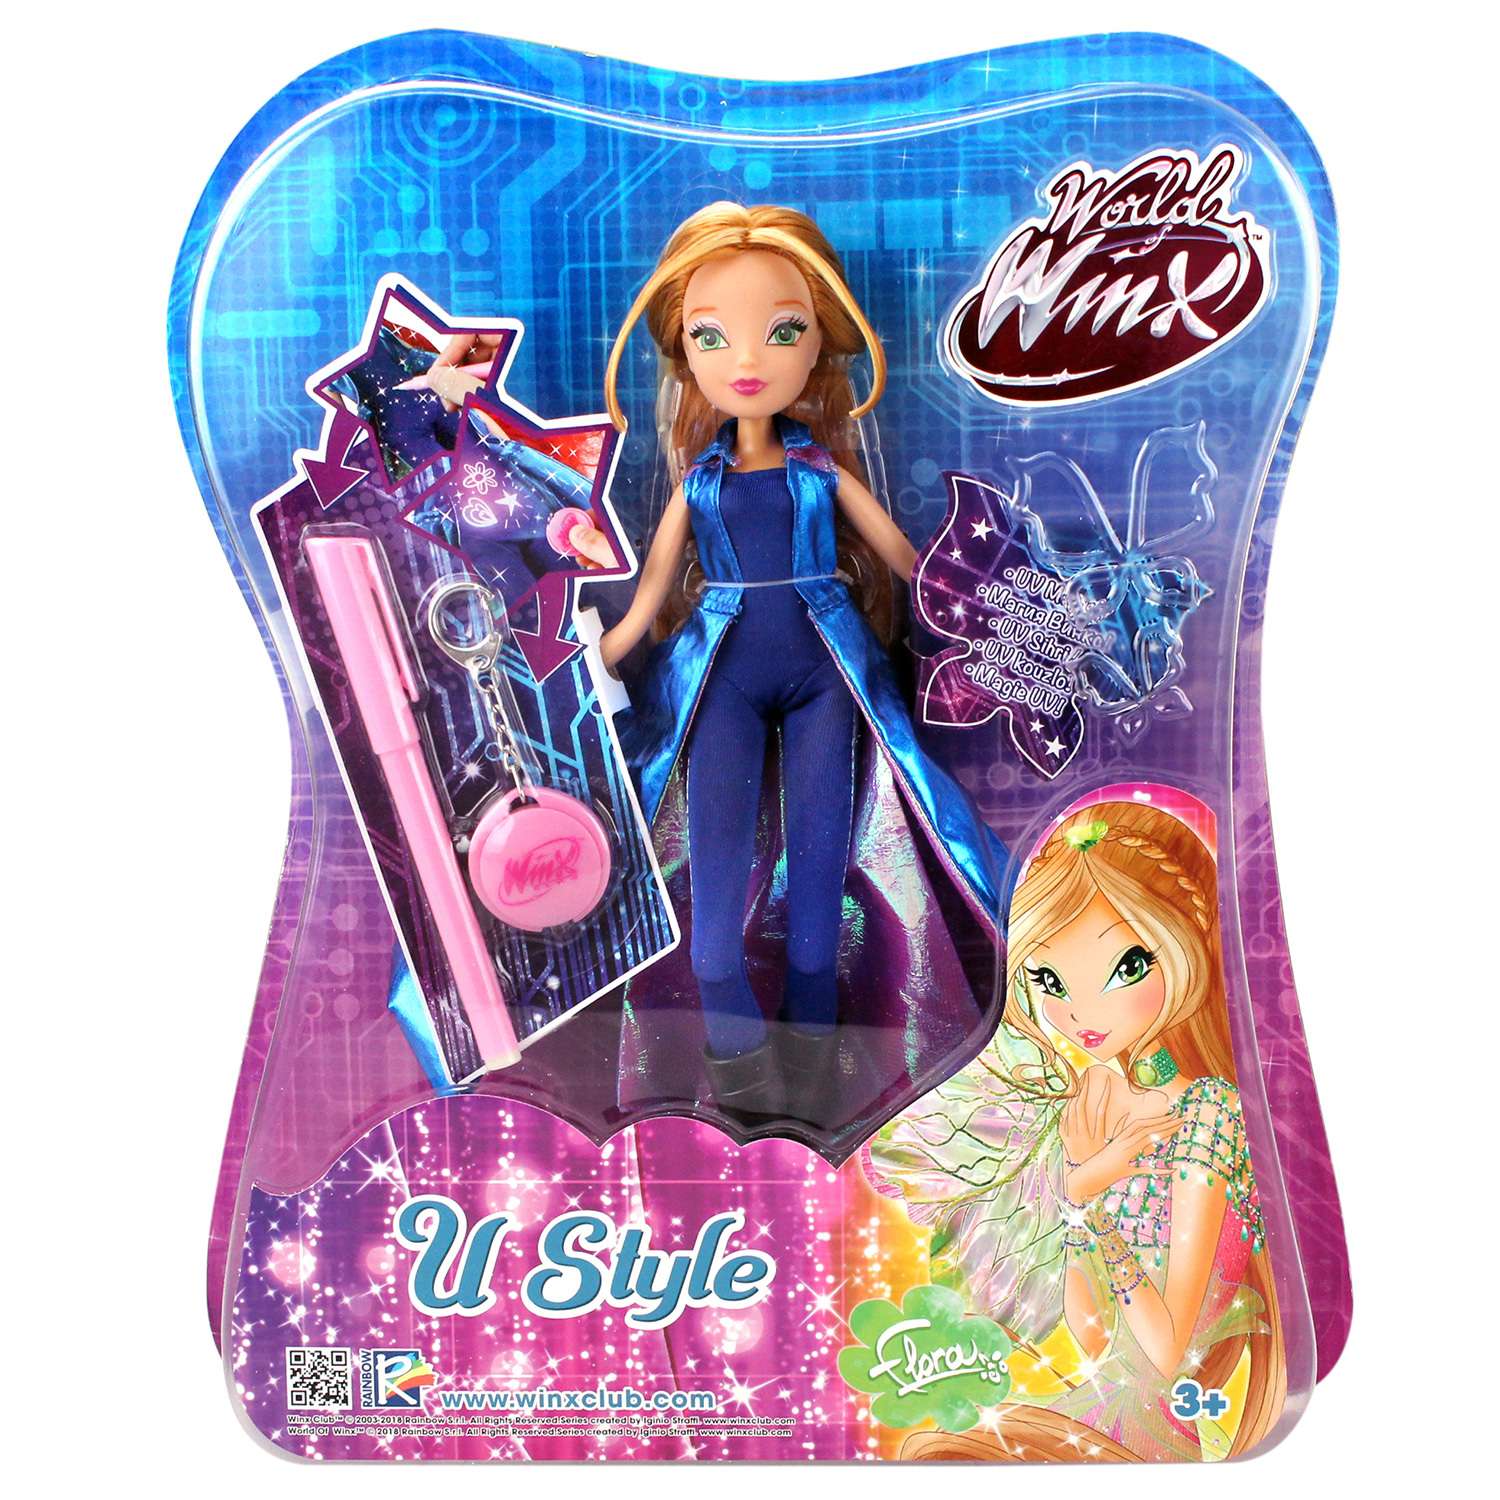 Кукла Wow Дримикс Флора от Winx Club, IW - купить в интернет-магазине ToyWay